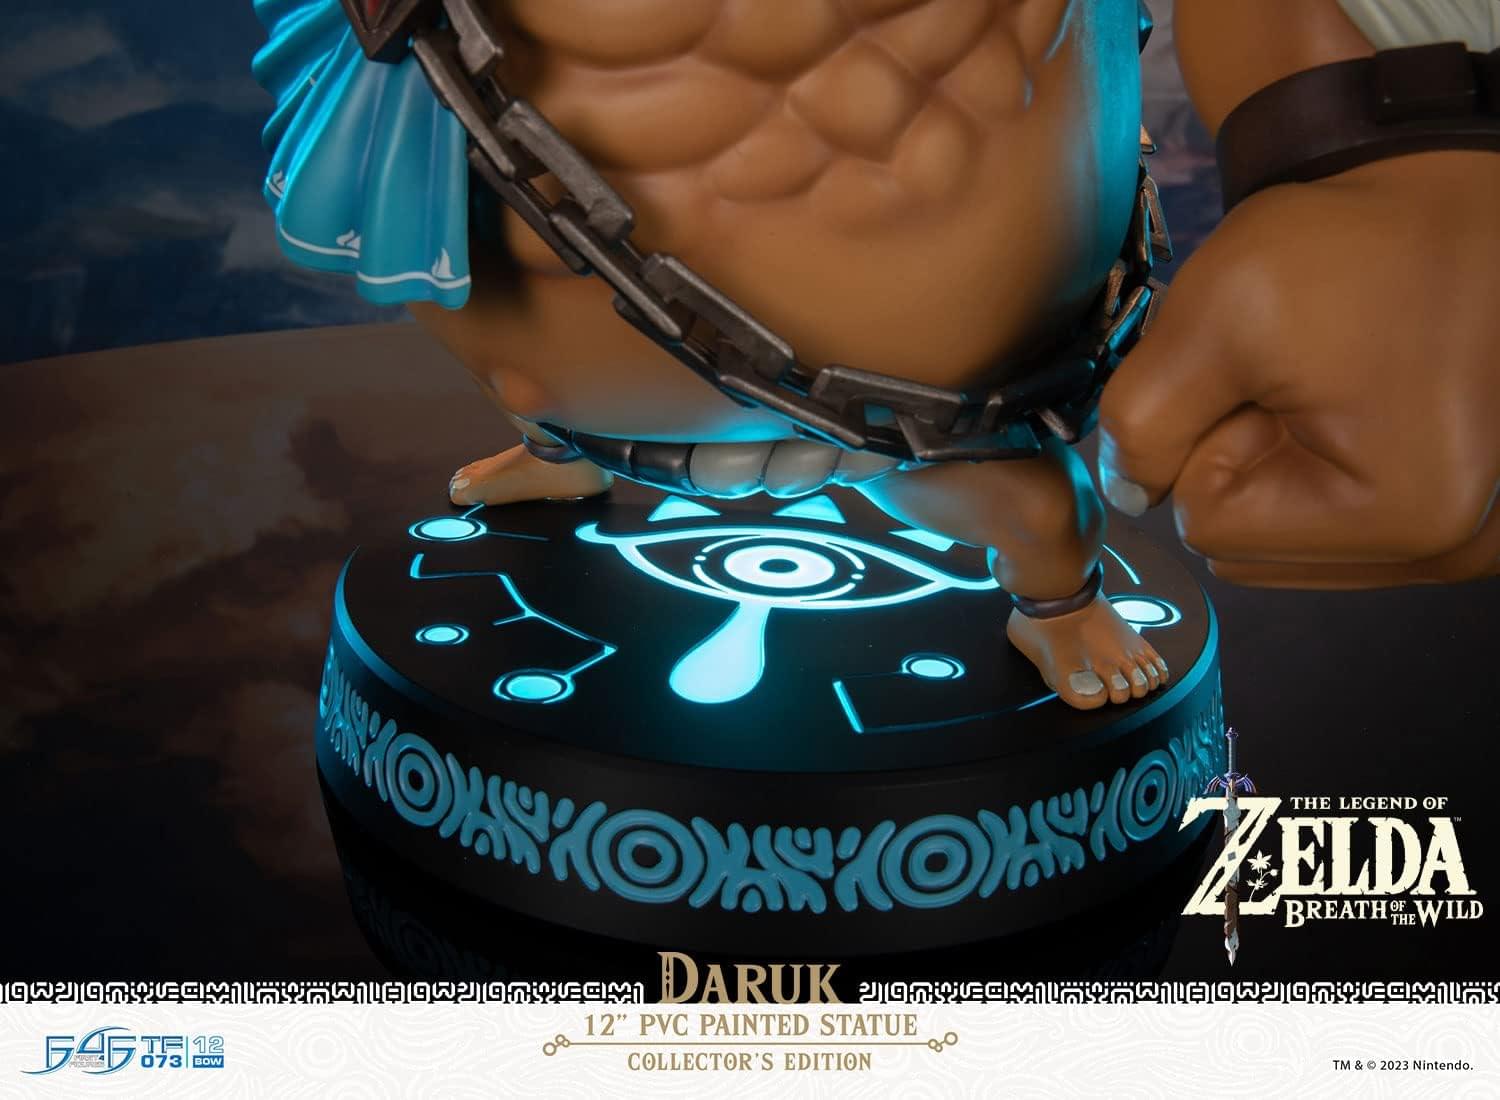 The Legend of Zelda: Breath of The Wild Daruk PVC Statue | Collector's Edition